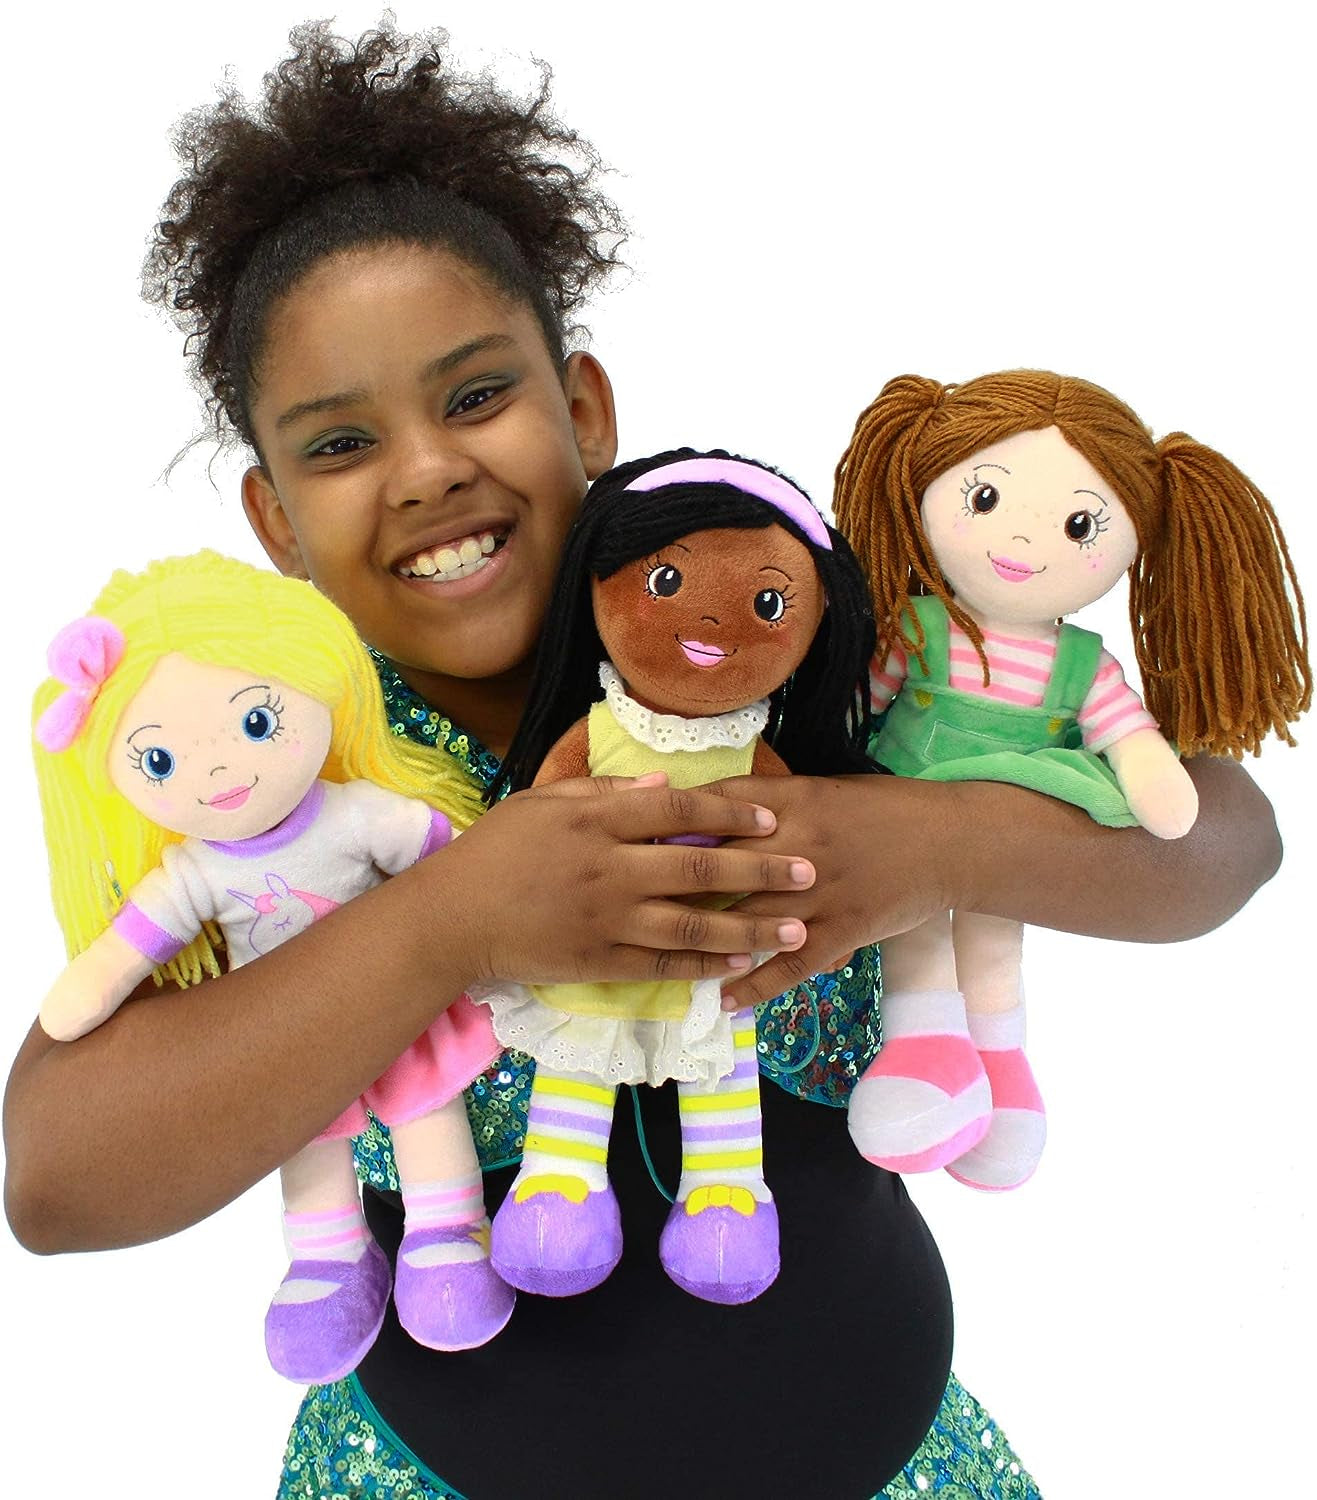 14" Soft Baby Doll - Plush Rag Dolls for 2 Year Old Girls & Boys, Toddler & Infants - Kaylie